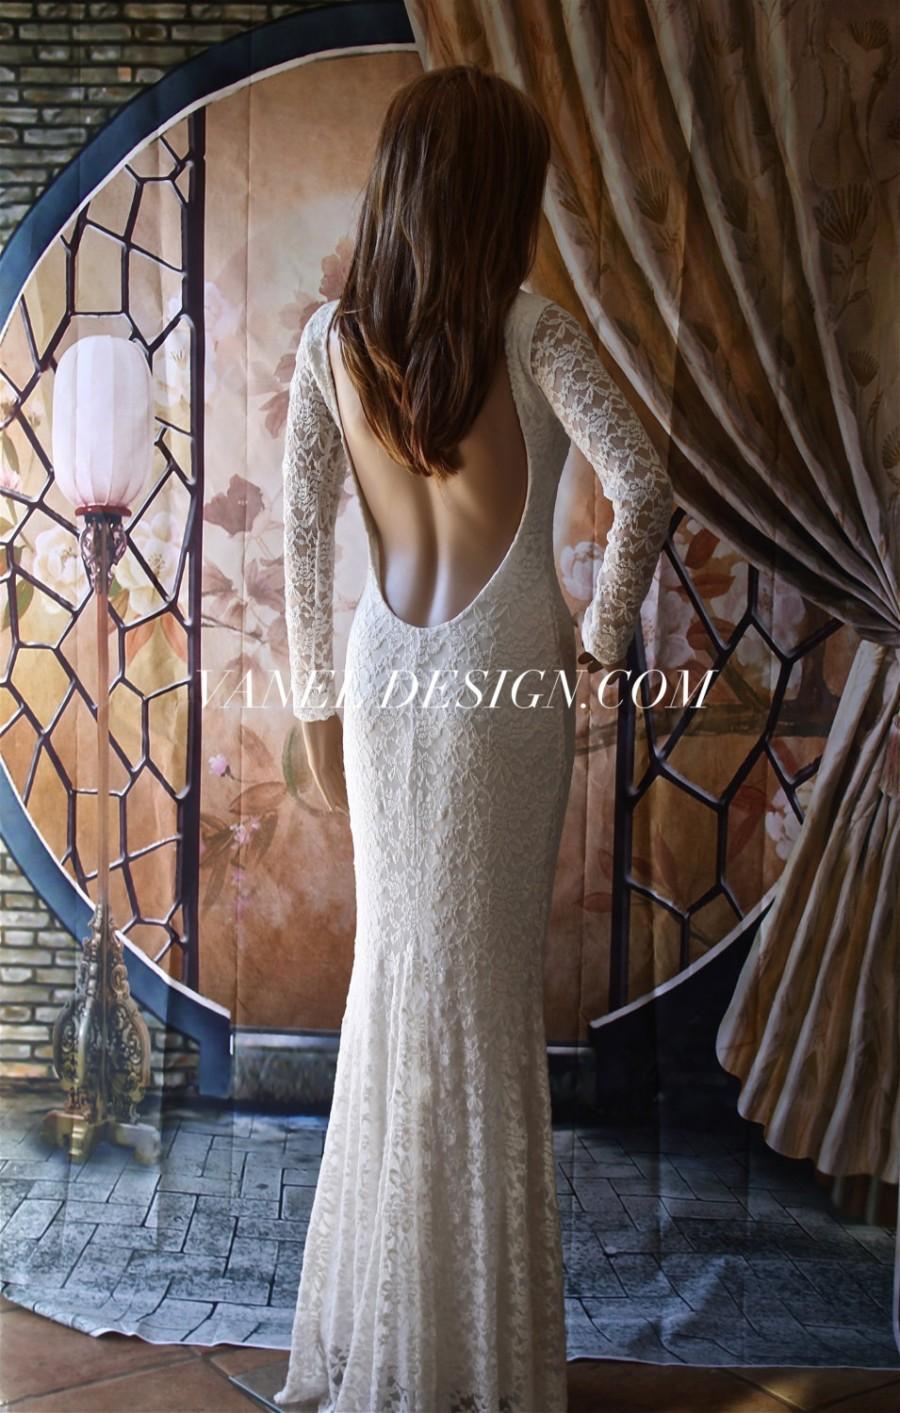 زفاف - WEDDING GOWN Long Sleeves White Lace Mermaid Wedding Dress**White OR Ivory**